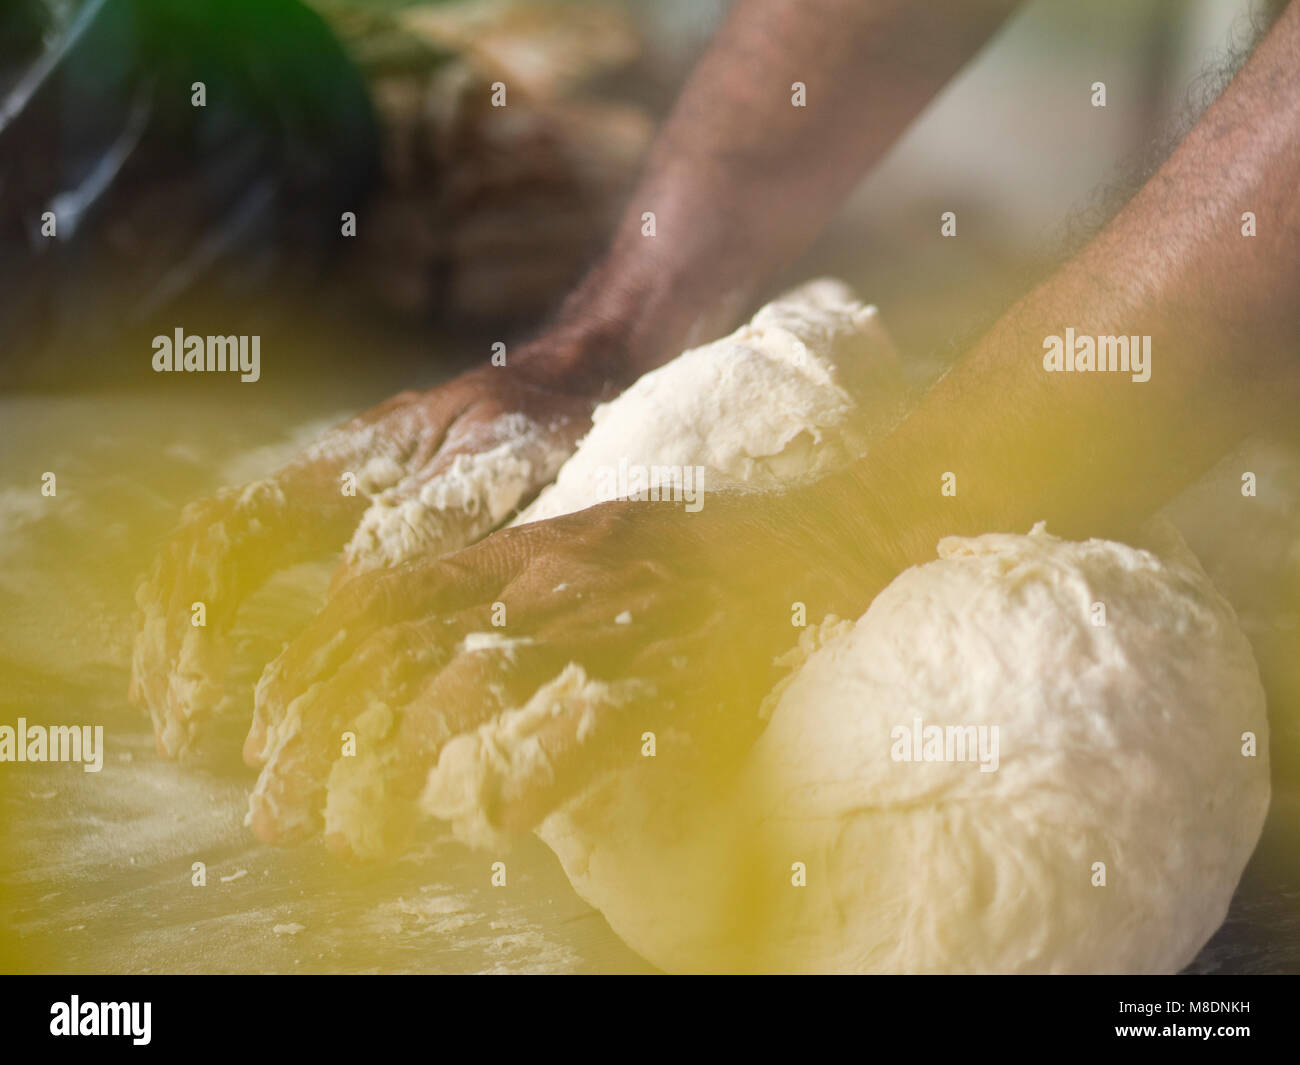 Man kneading roti dough Stock Photo